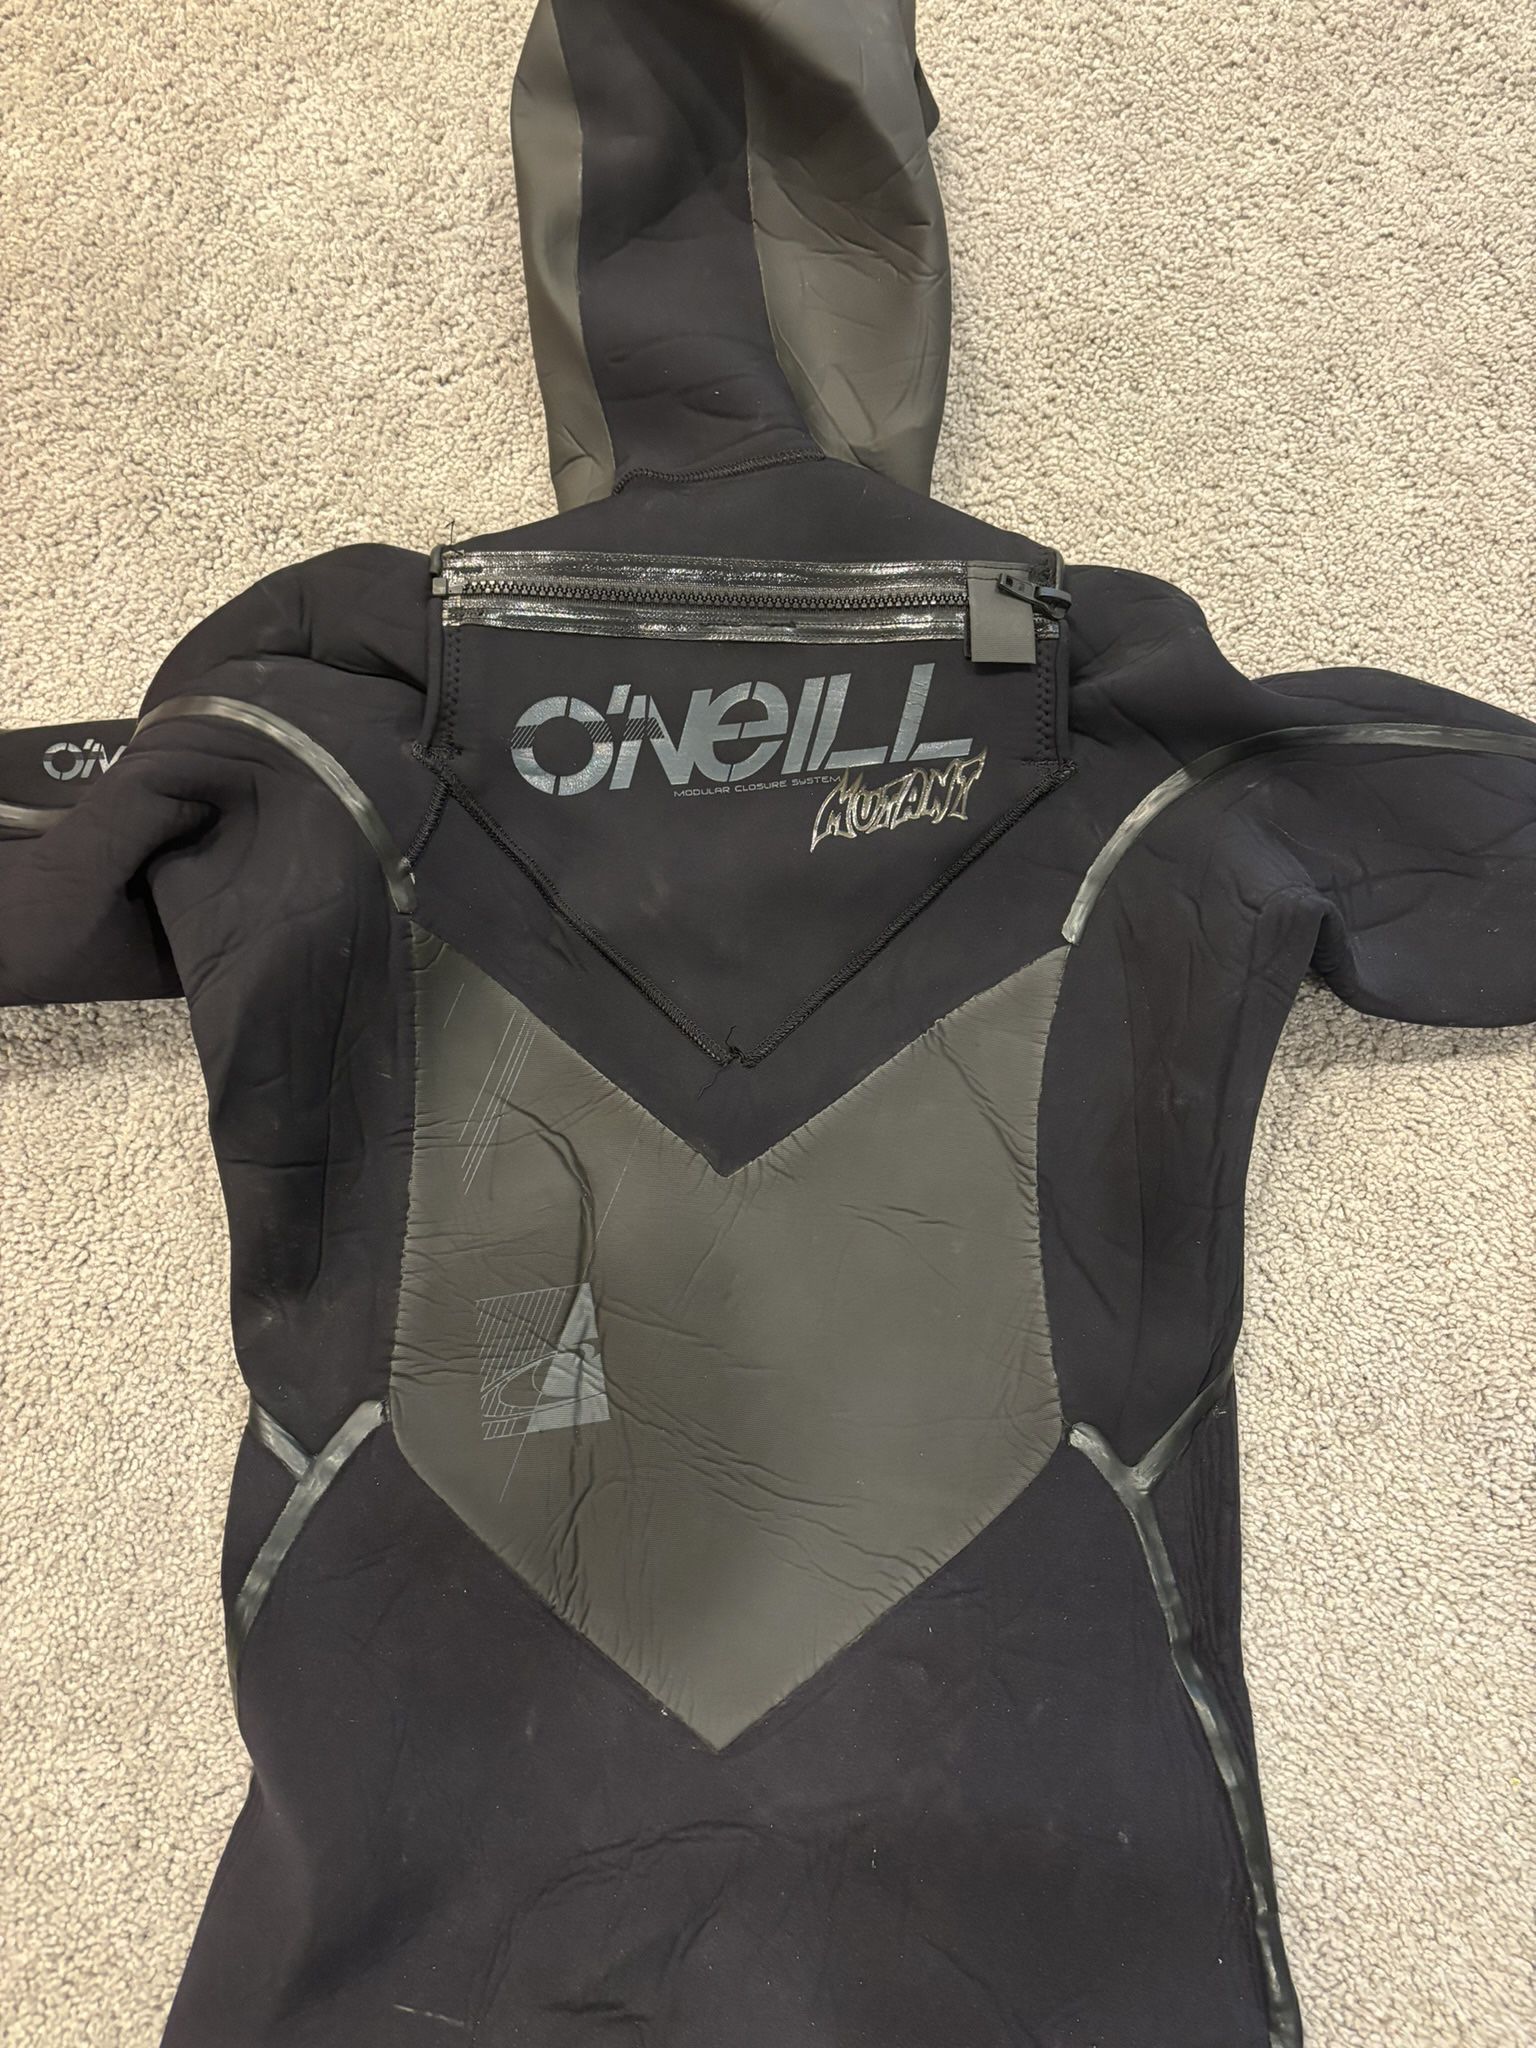 O’Neill Mutant 4/3 Wet Suit